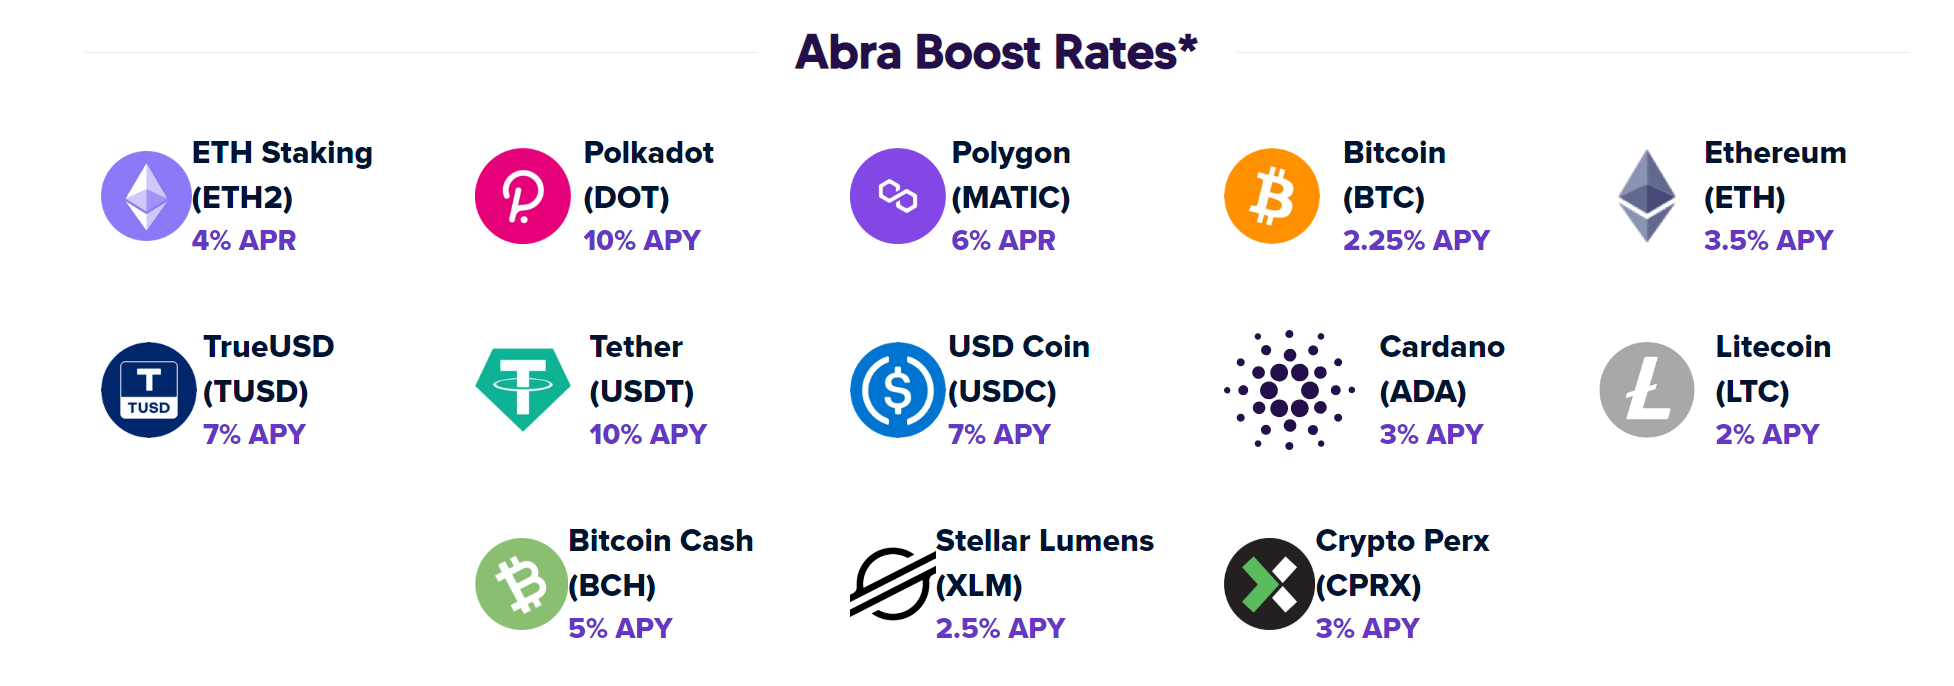 Abra_boost_rates